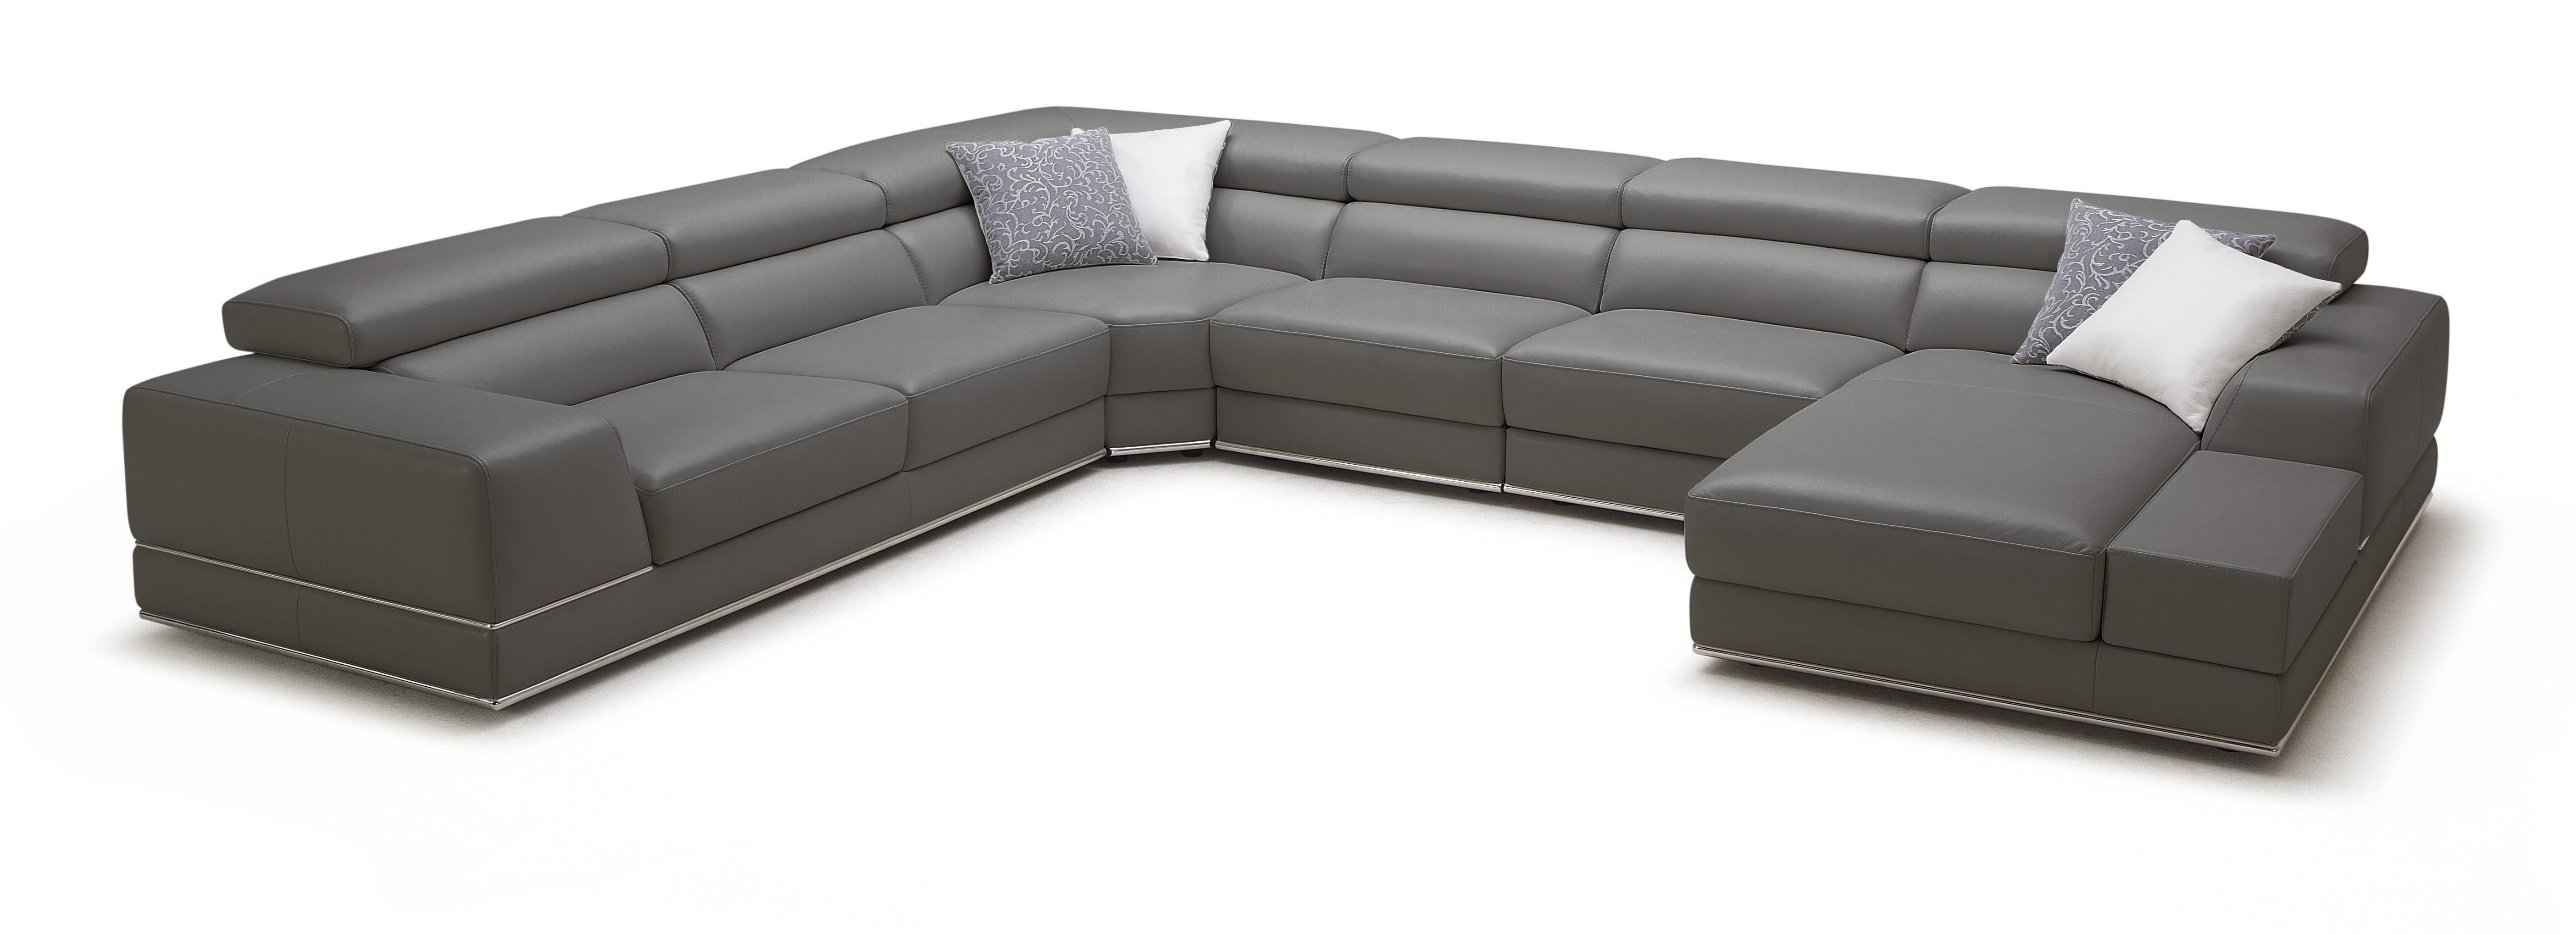 bergamo sectional leather modern sofa elephant gray